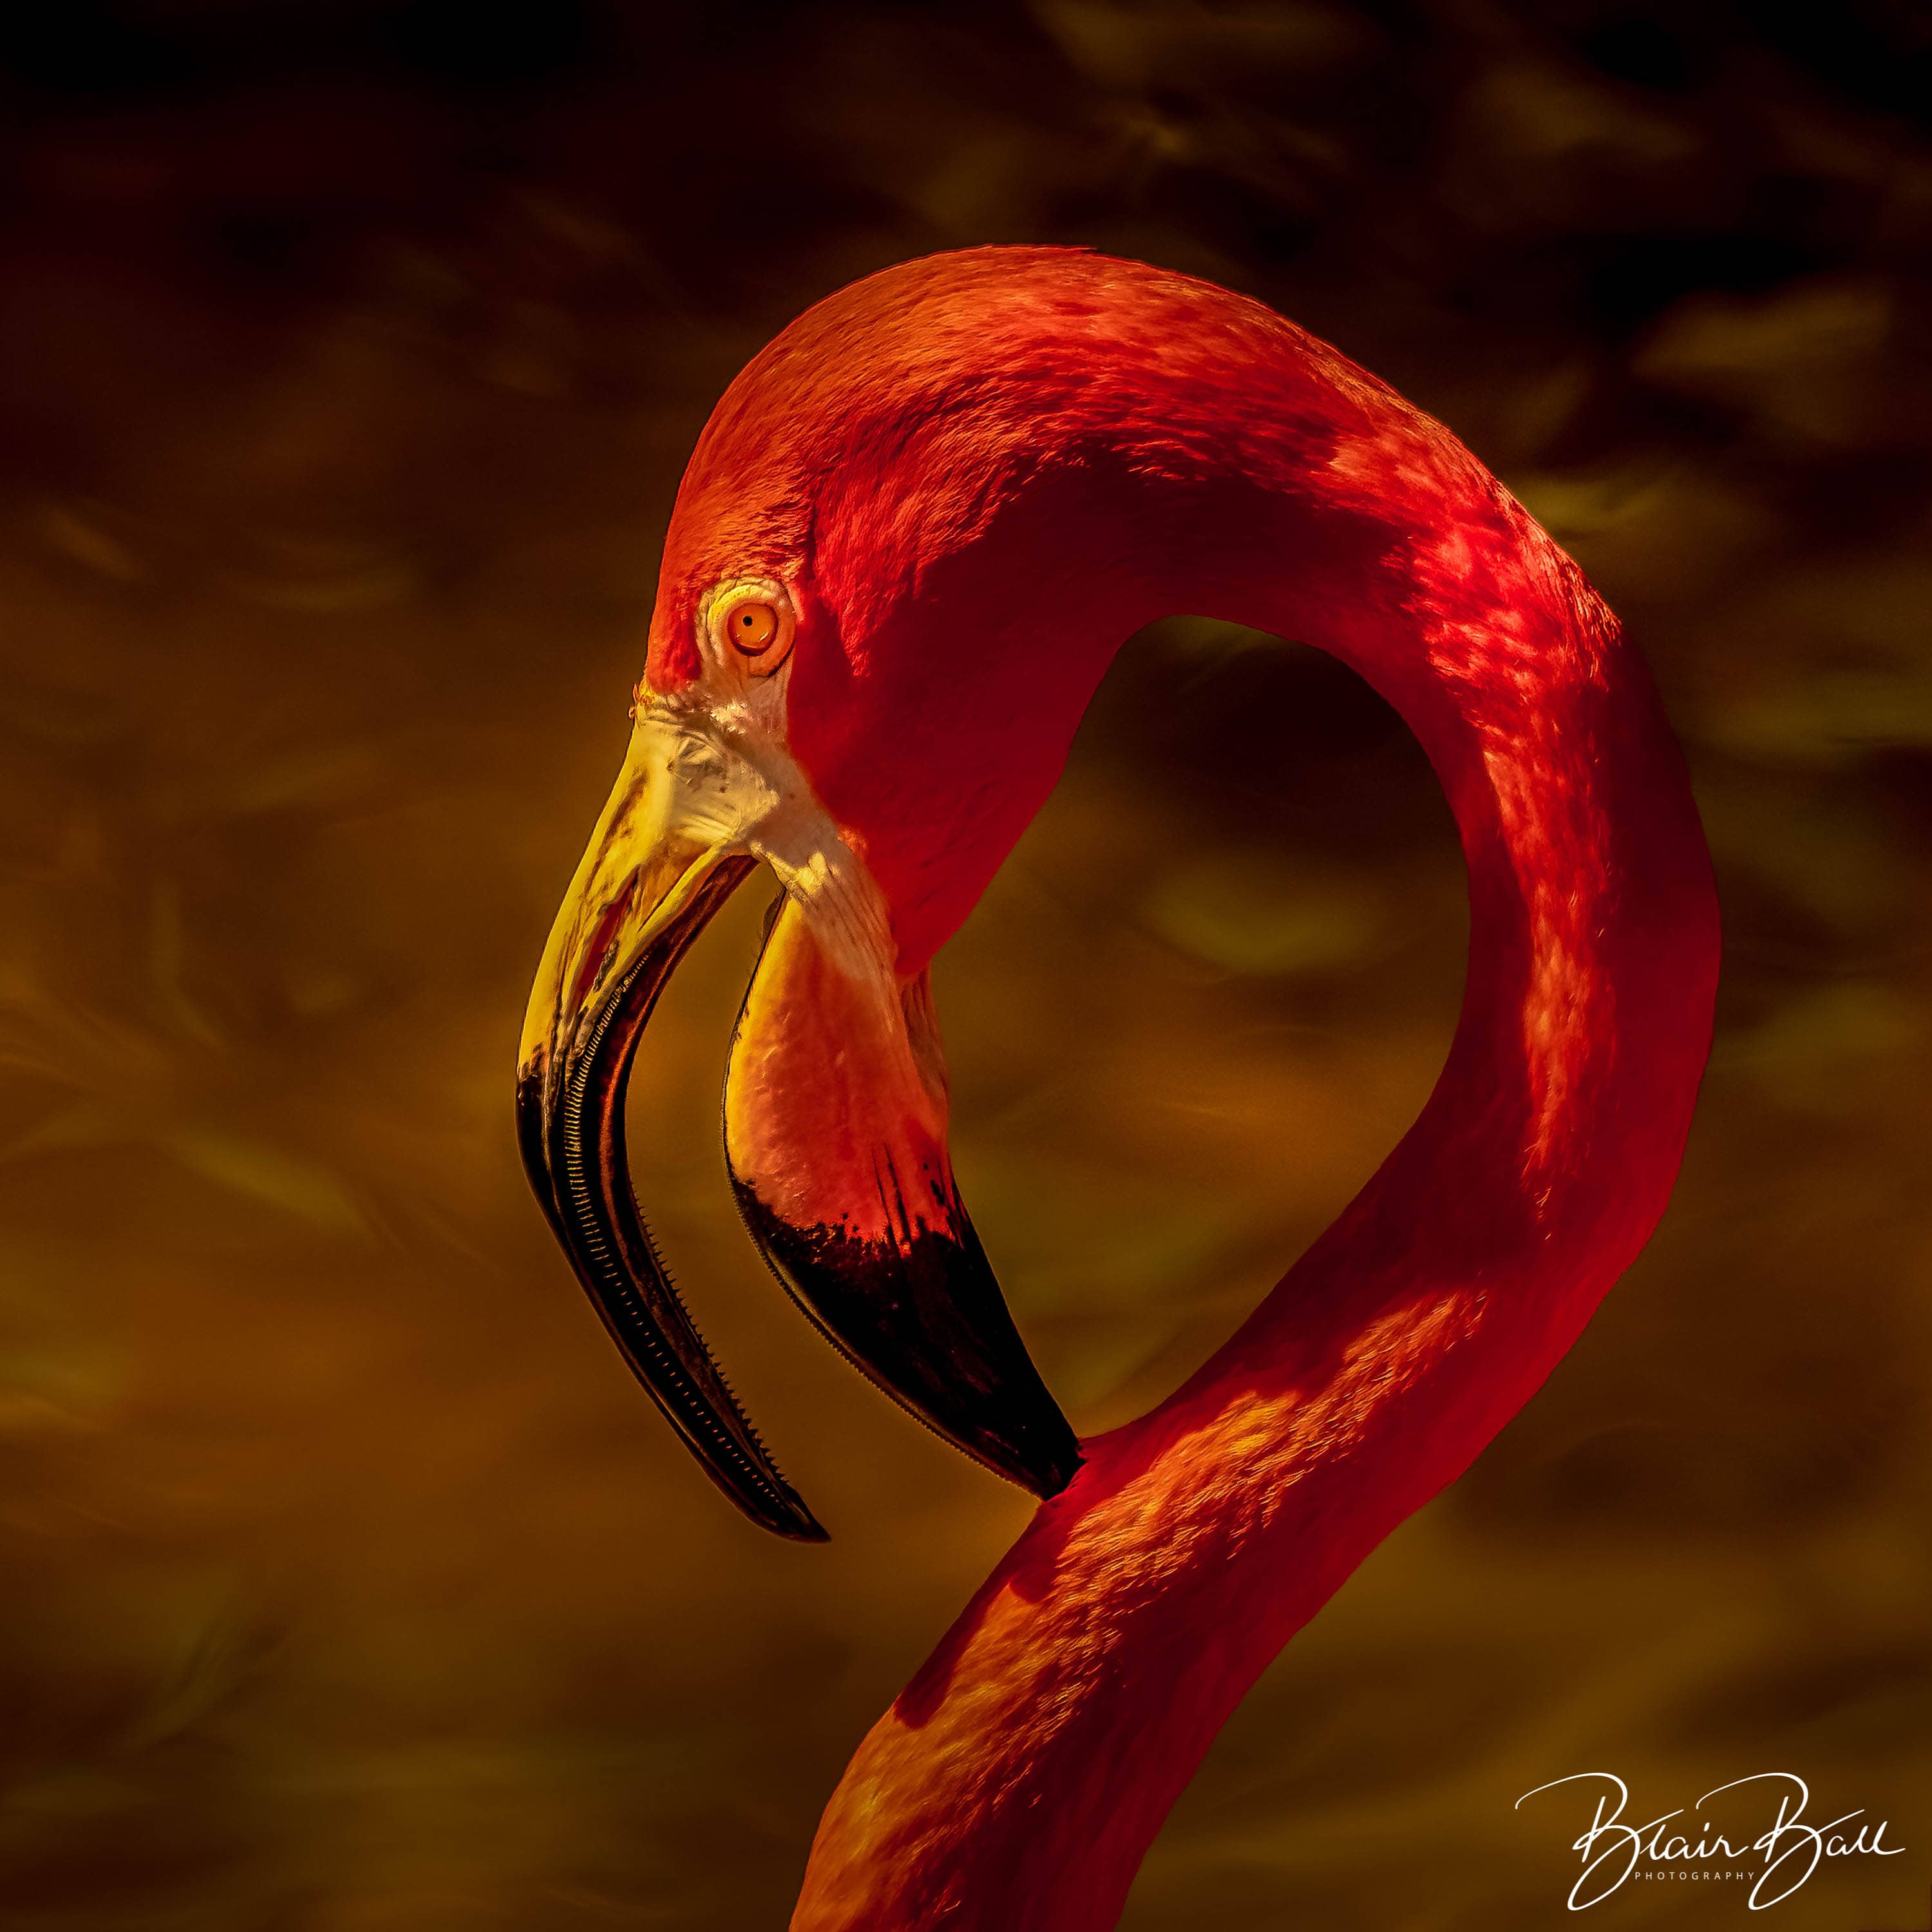 Florida Flamingo Portrait - ©Blair Ball Photography Image